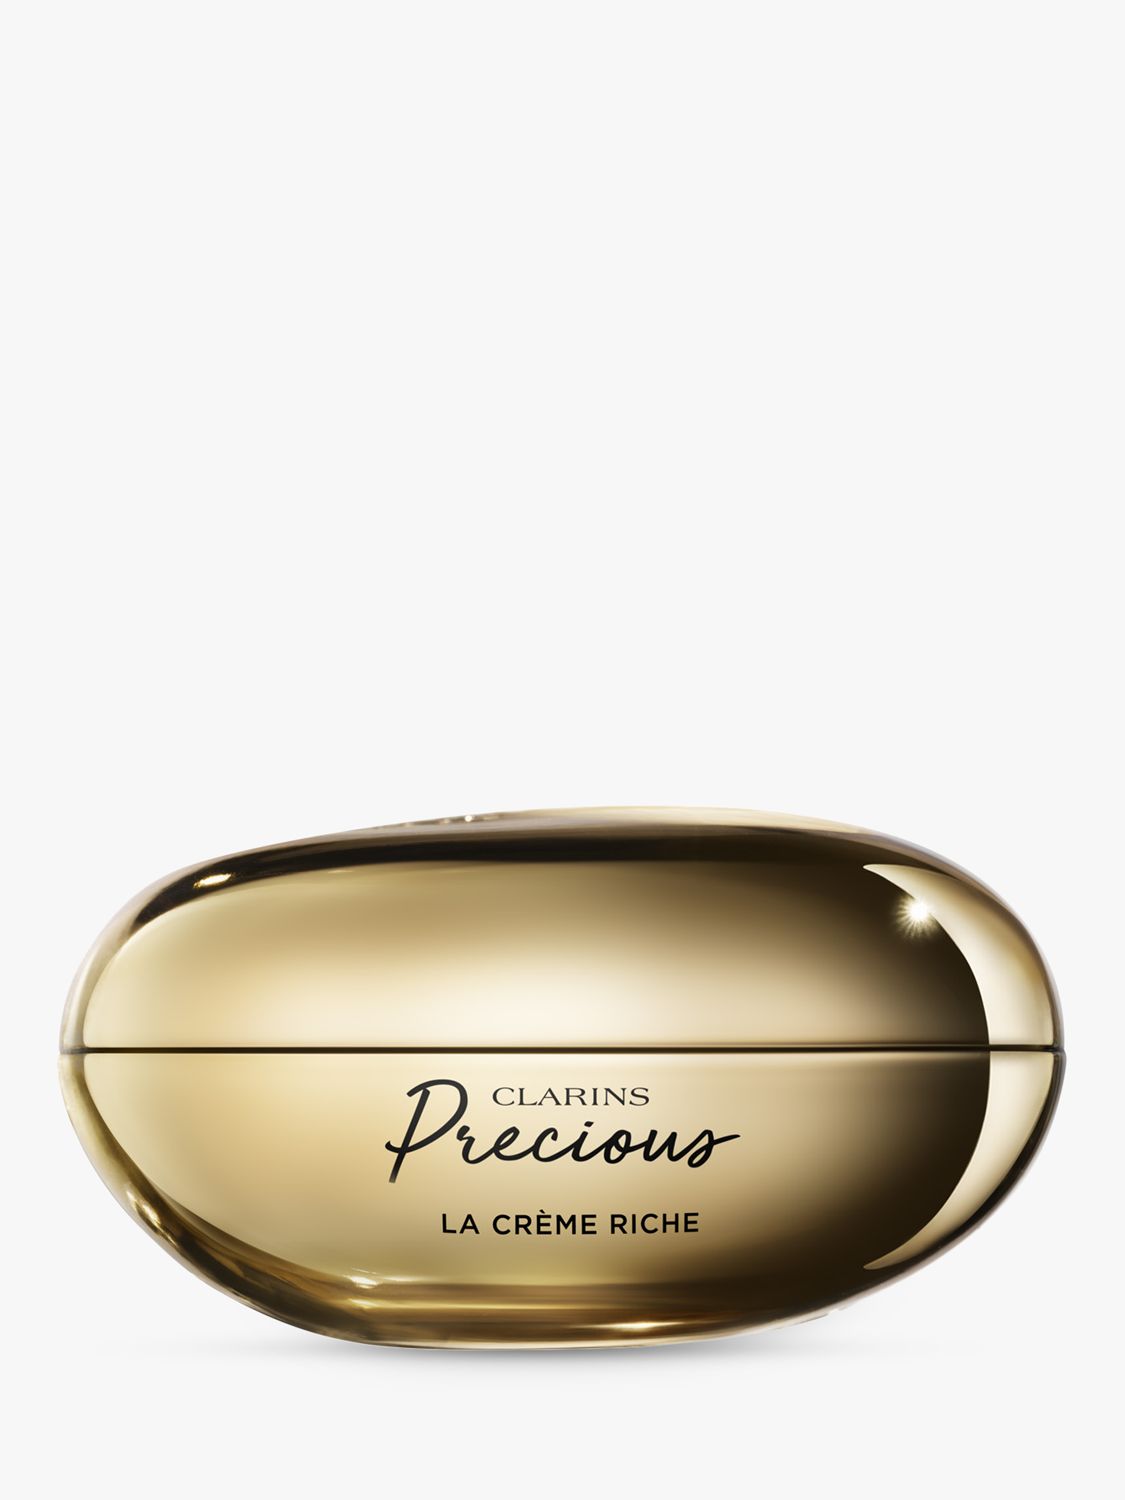 Clarins Precious La Crème Riche Age-Defying Moisturiser, 50ml